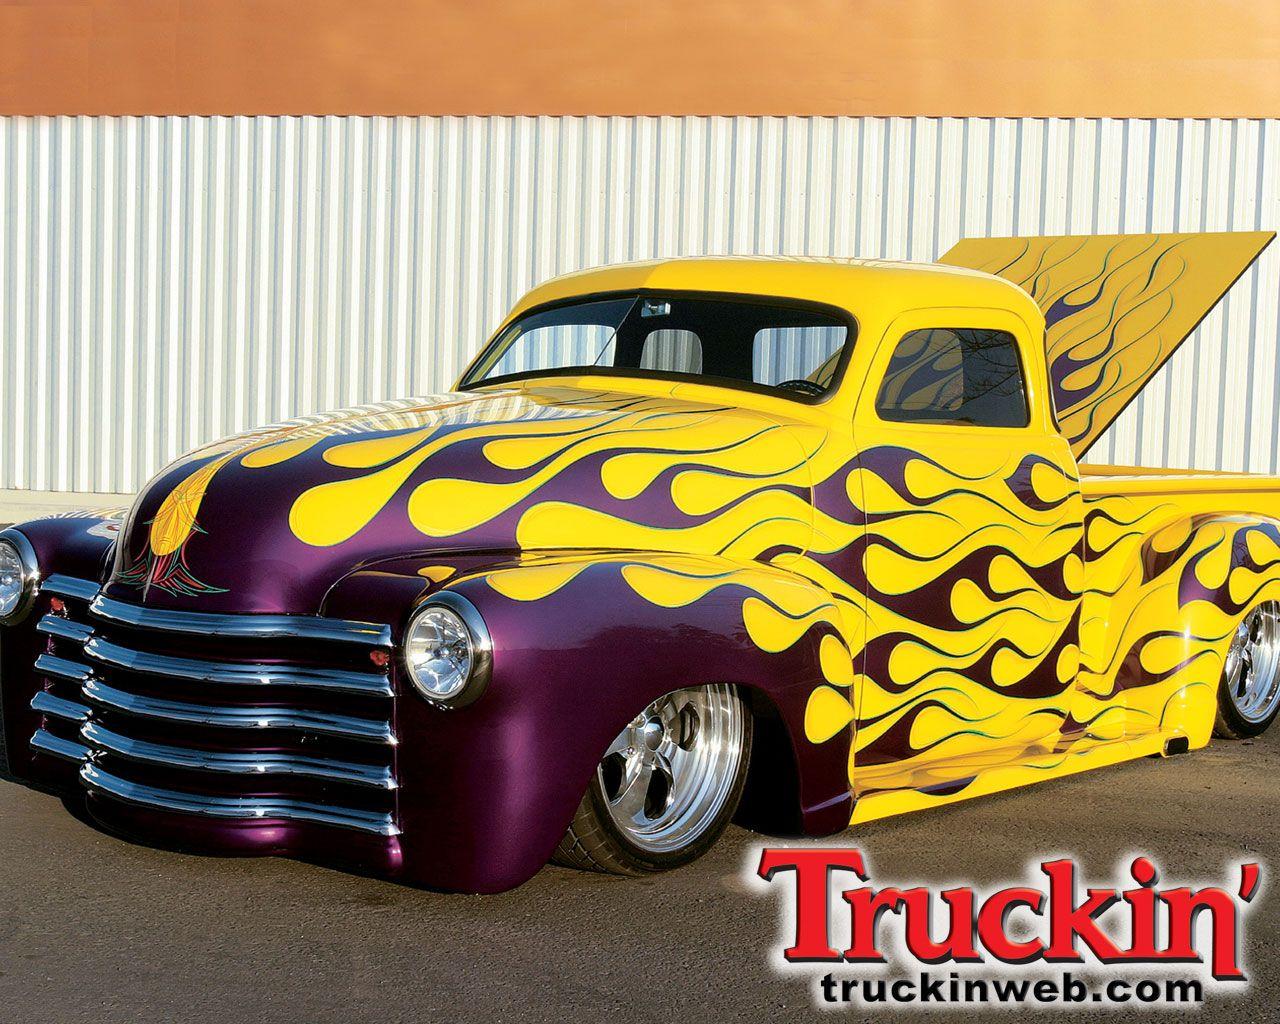 Wallpaper 57 Chevy Truck. Wallpaper, truck, custom. Pimp my